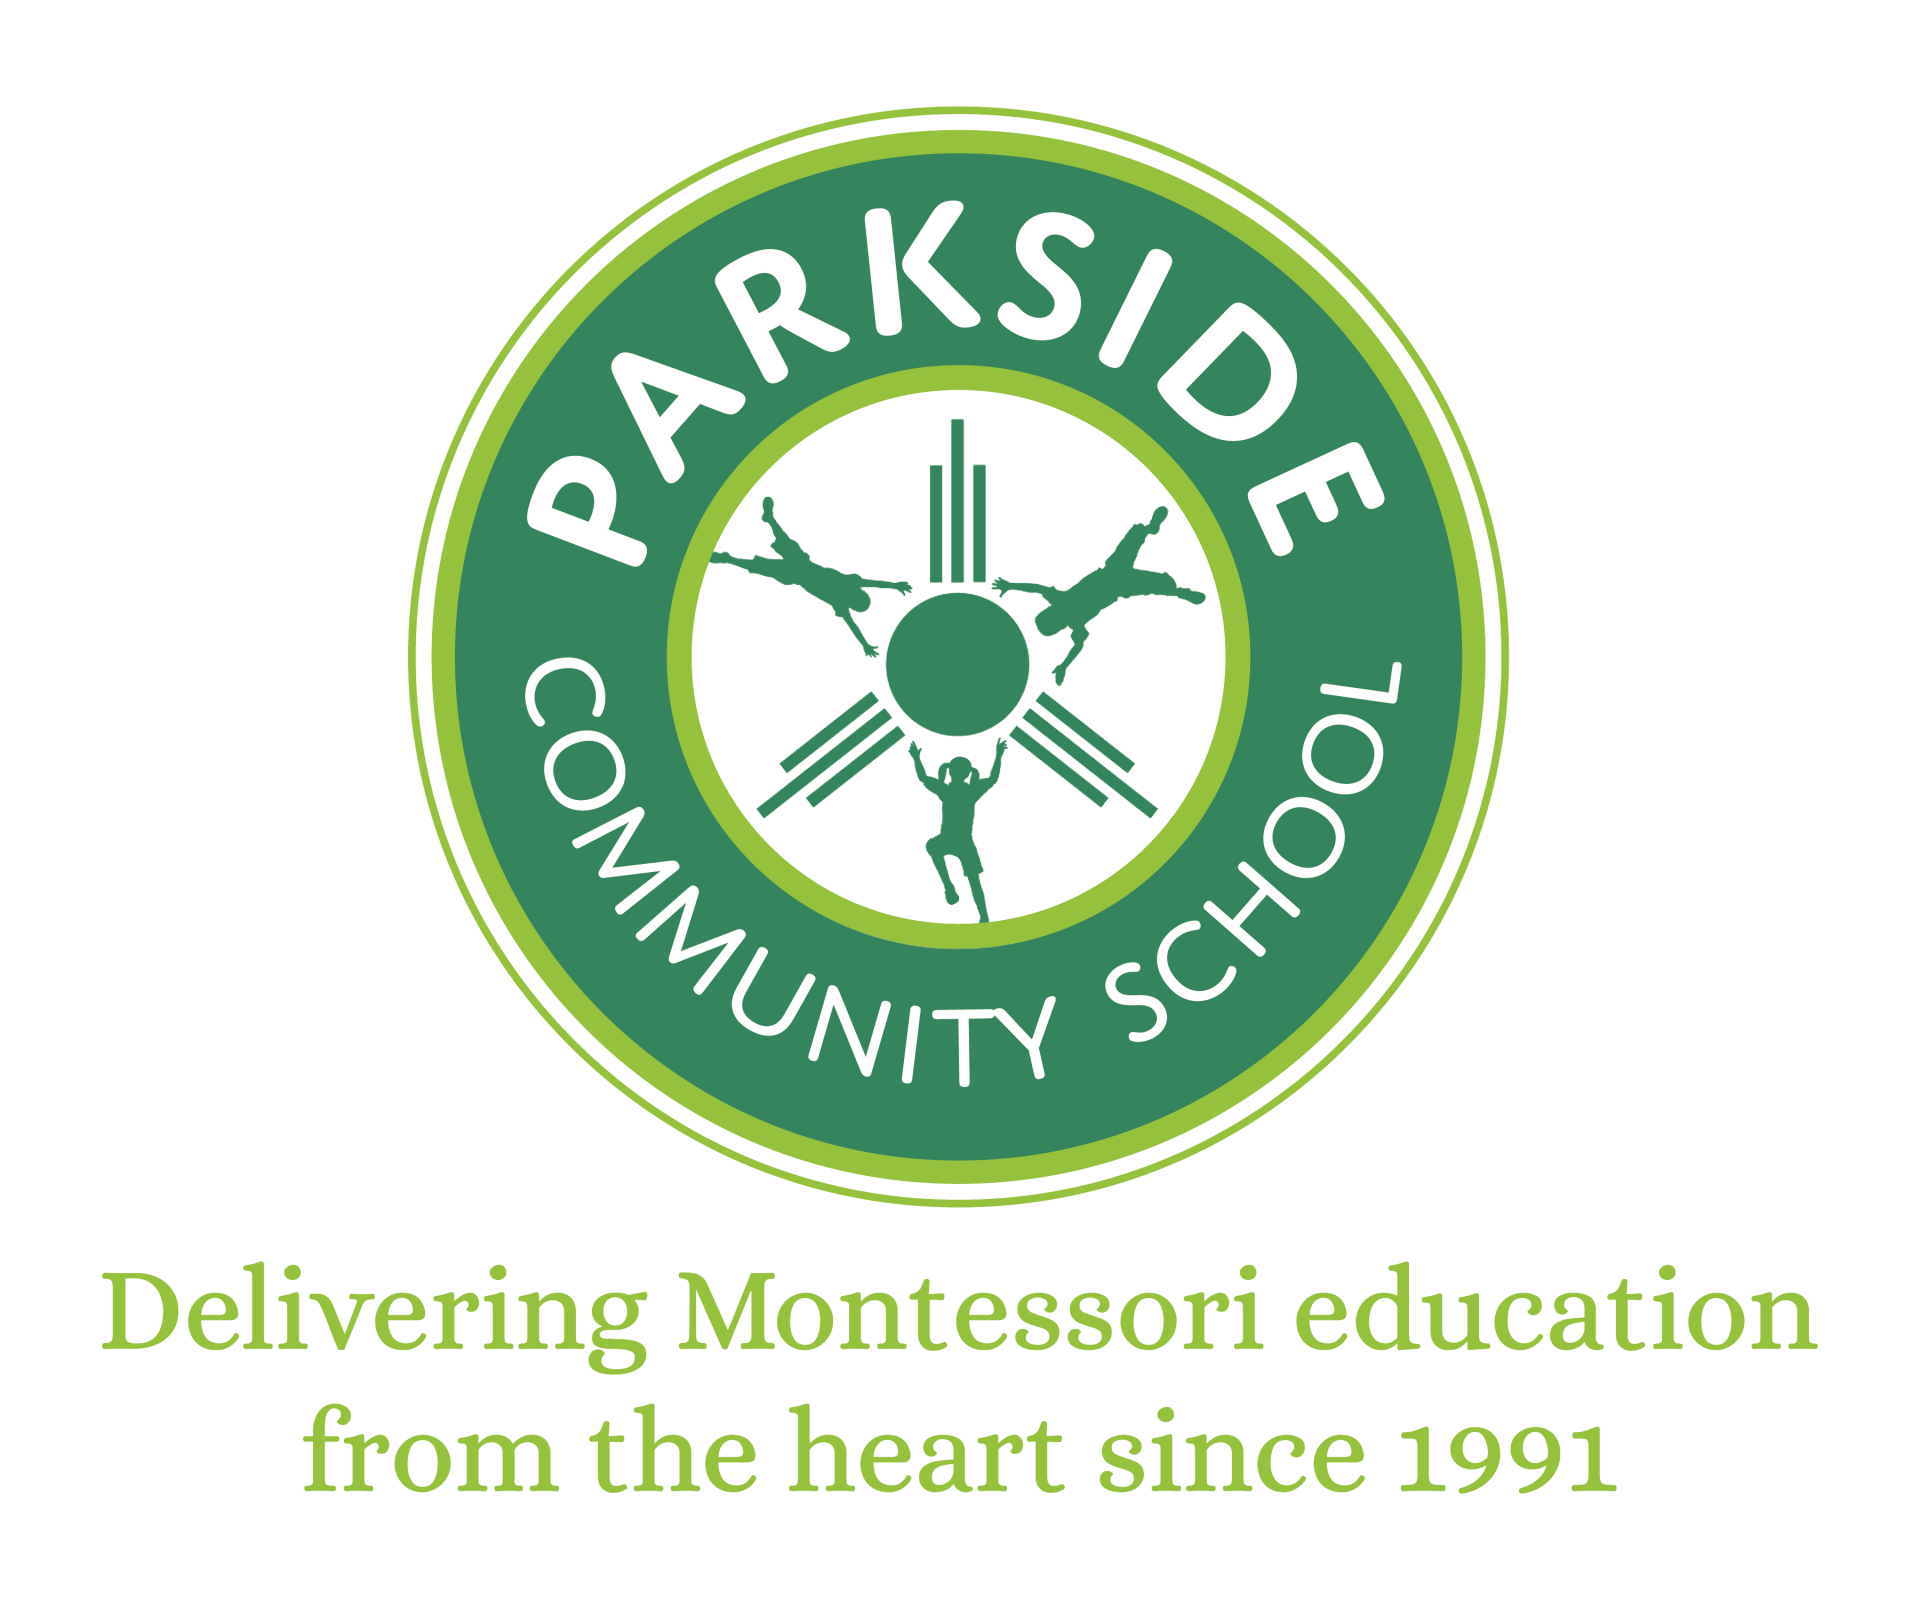 Parkside Community School